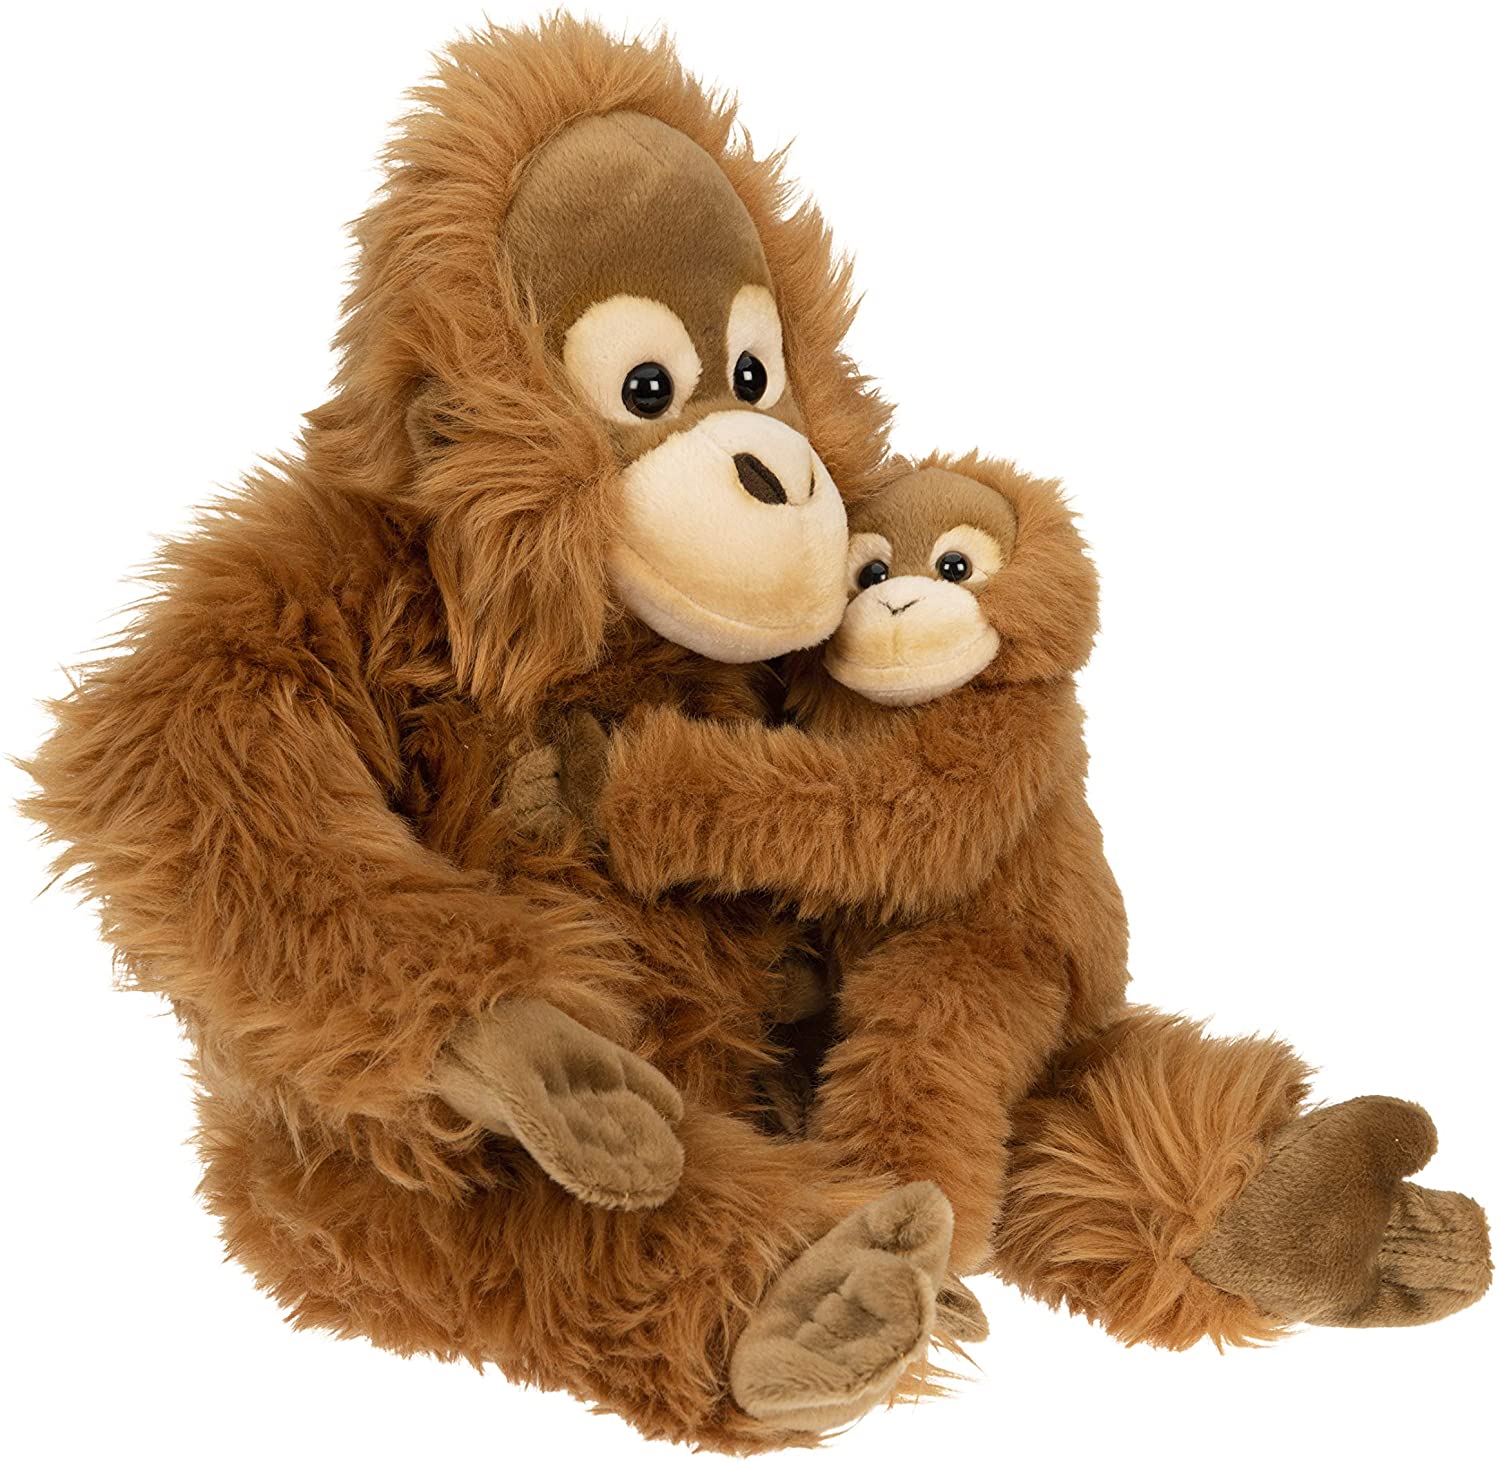  orangutan with baby, sitting - 30 cm (height) 